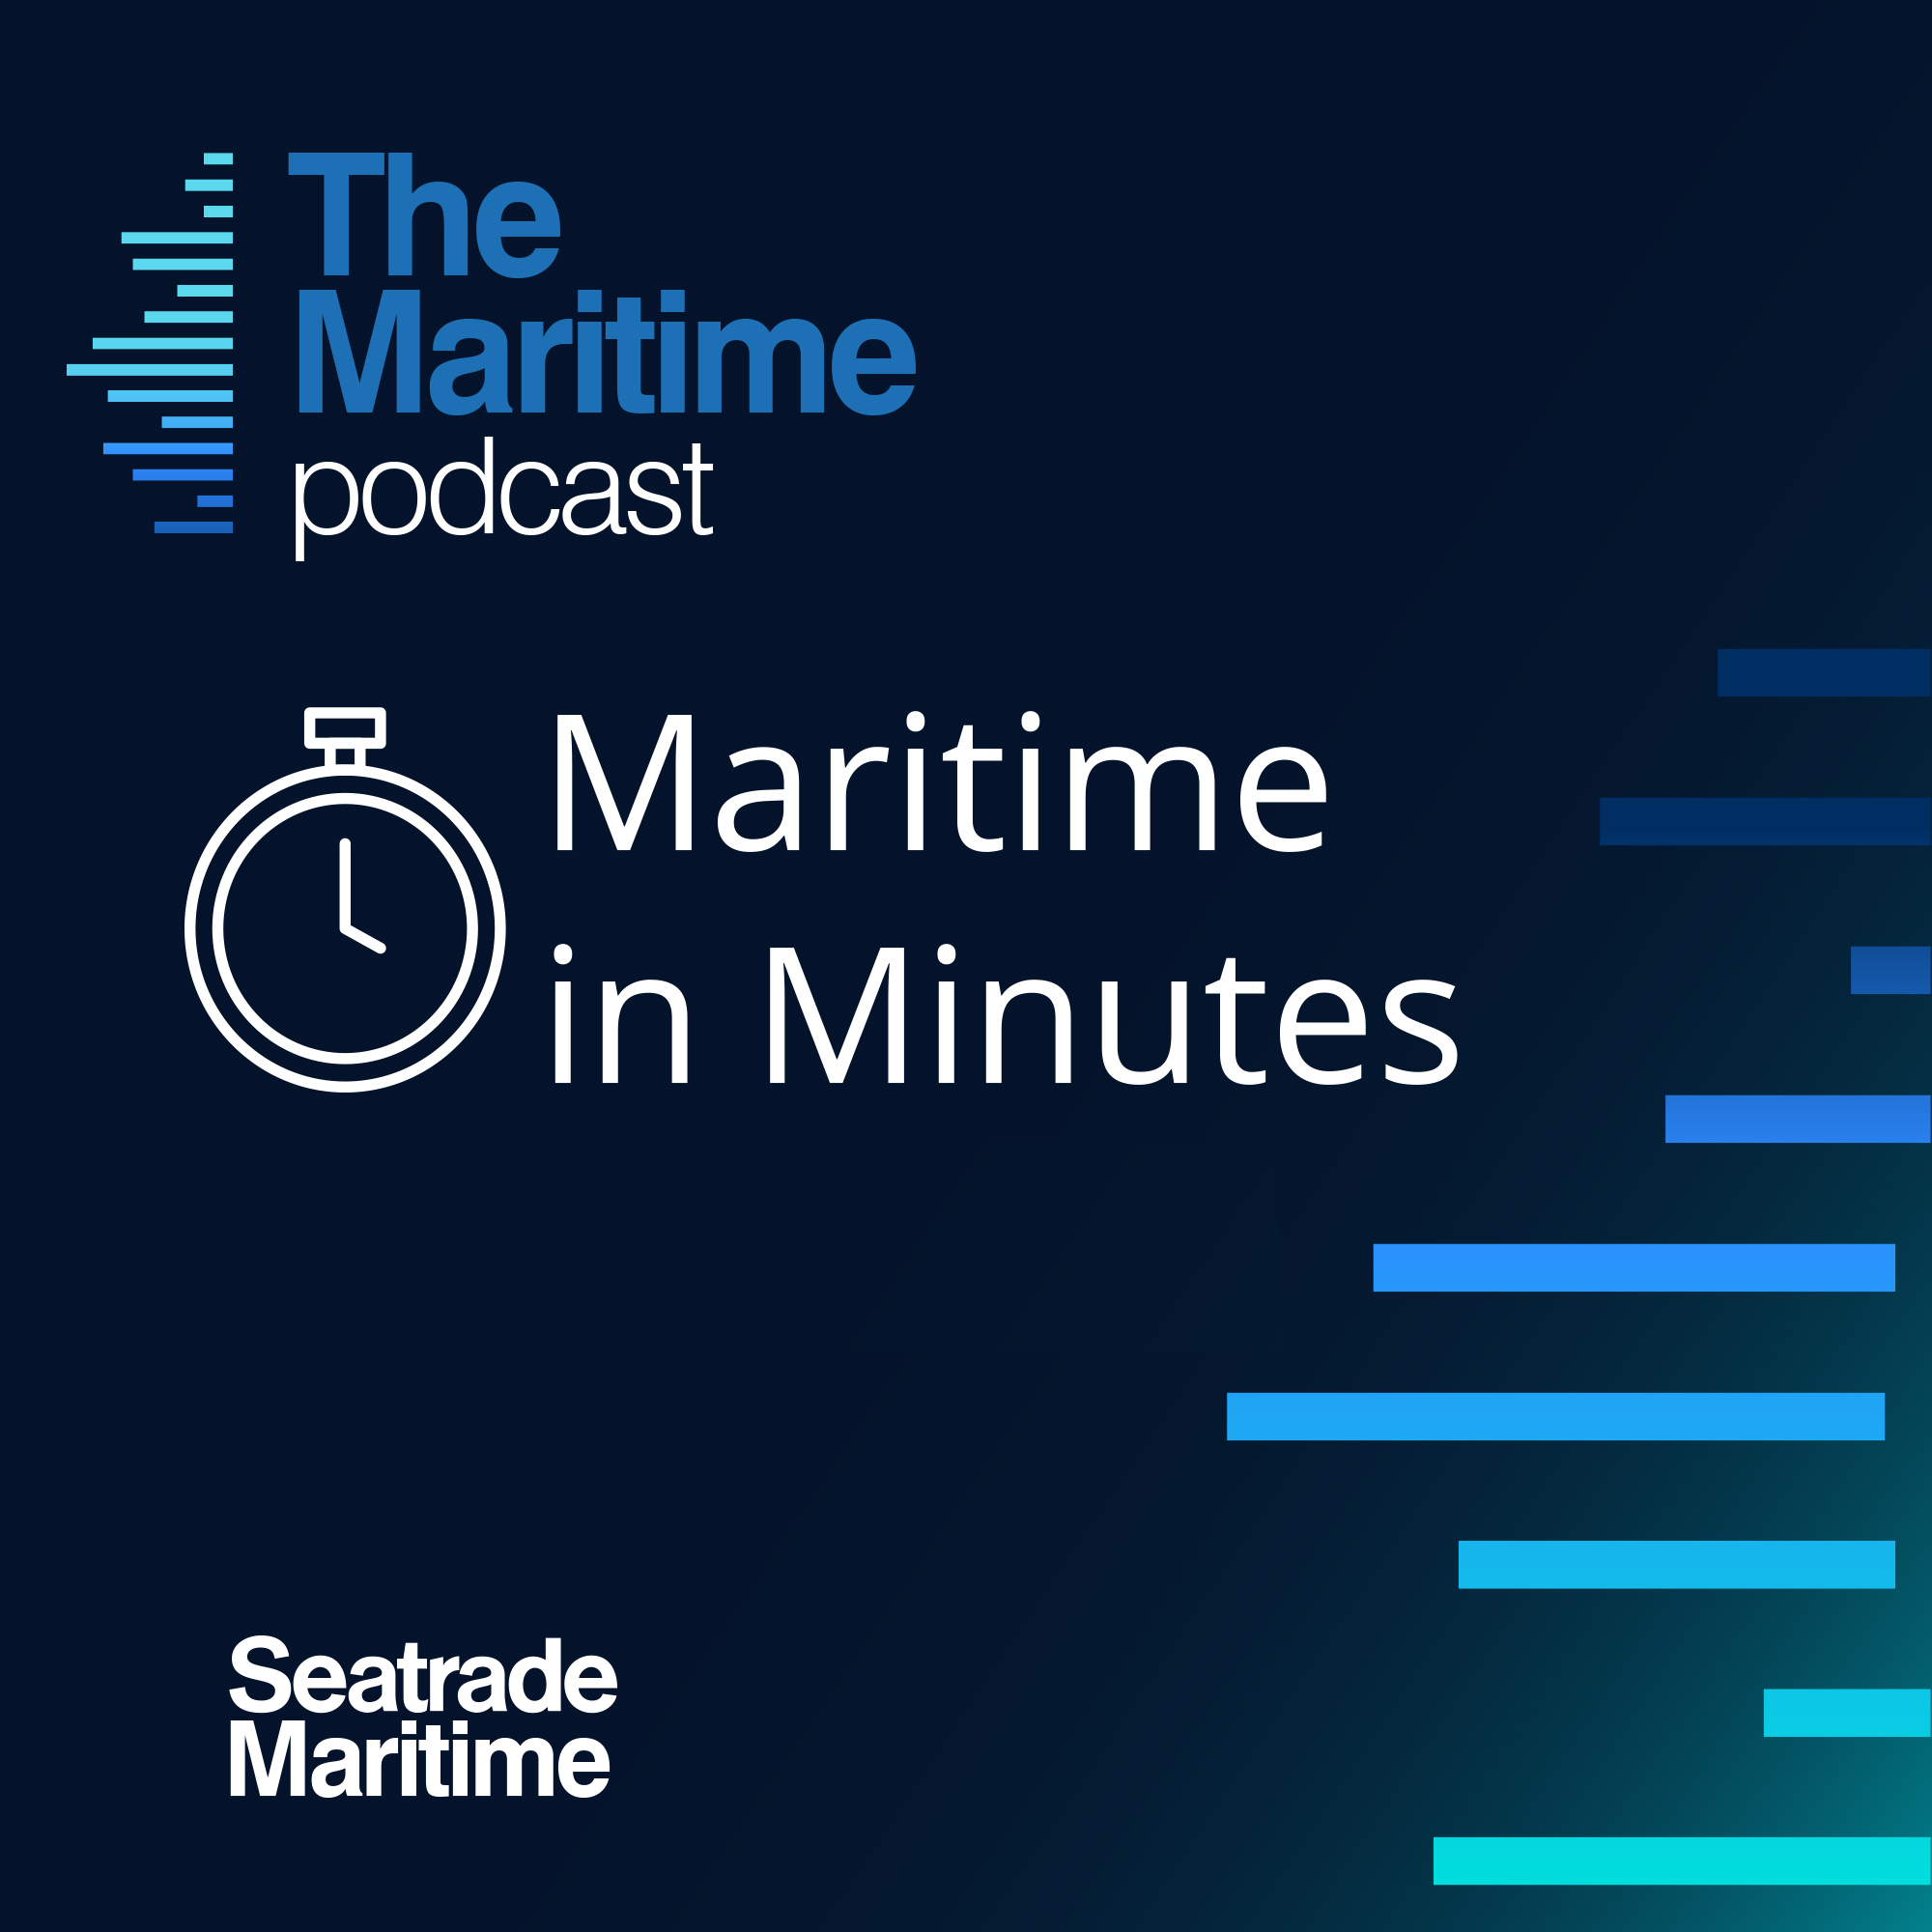 Artwork for podcast The Maritime Podcast